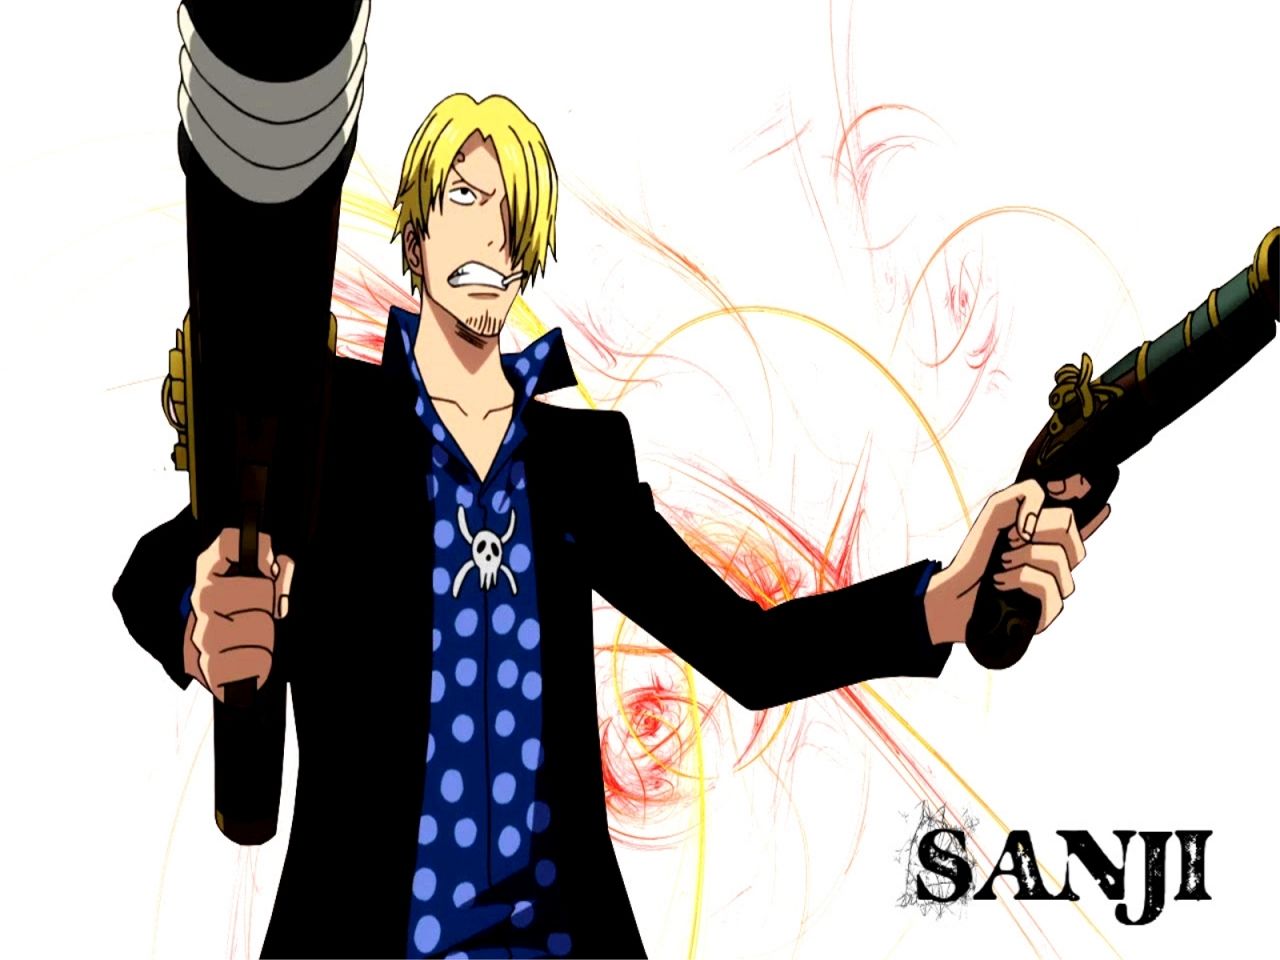 Sanji - One Piece Wallpaper (26359890) - Fanpop